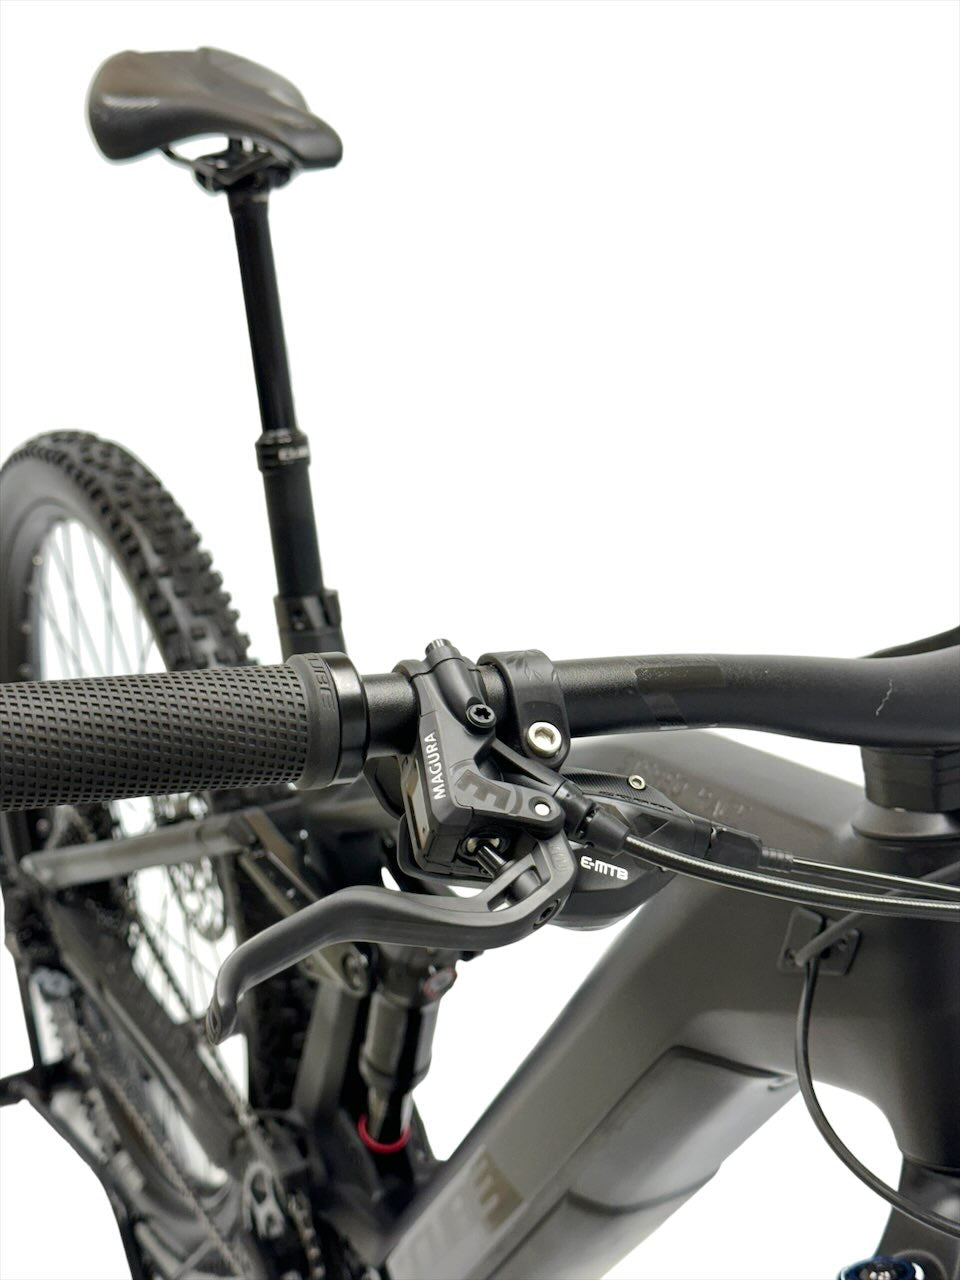 <tc>Cube Stereo Hybrid 140 Race 625 29 pulgadas Bicicletas eléctricas de montaña</tc>